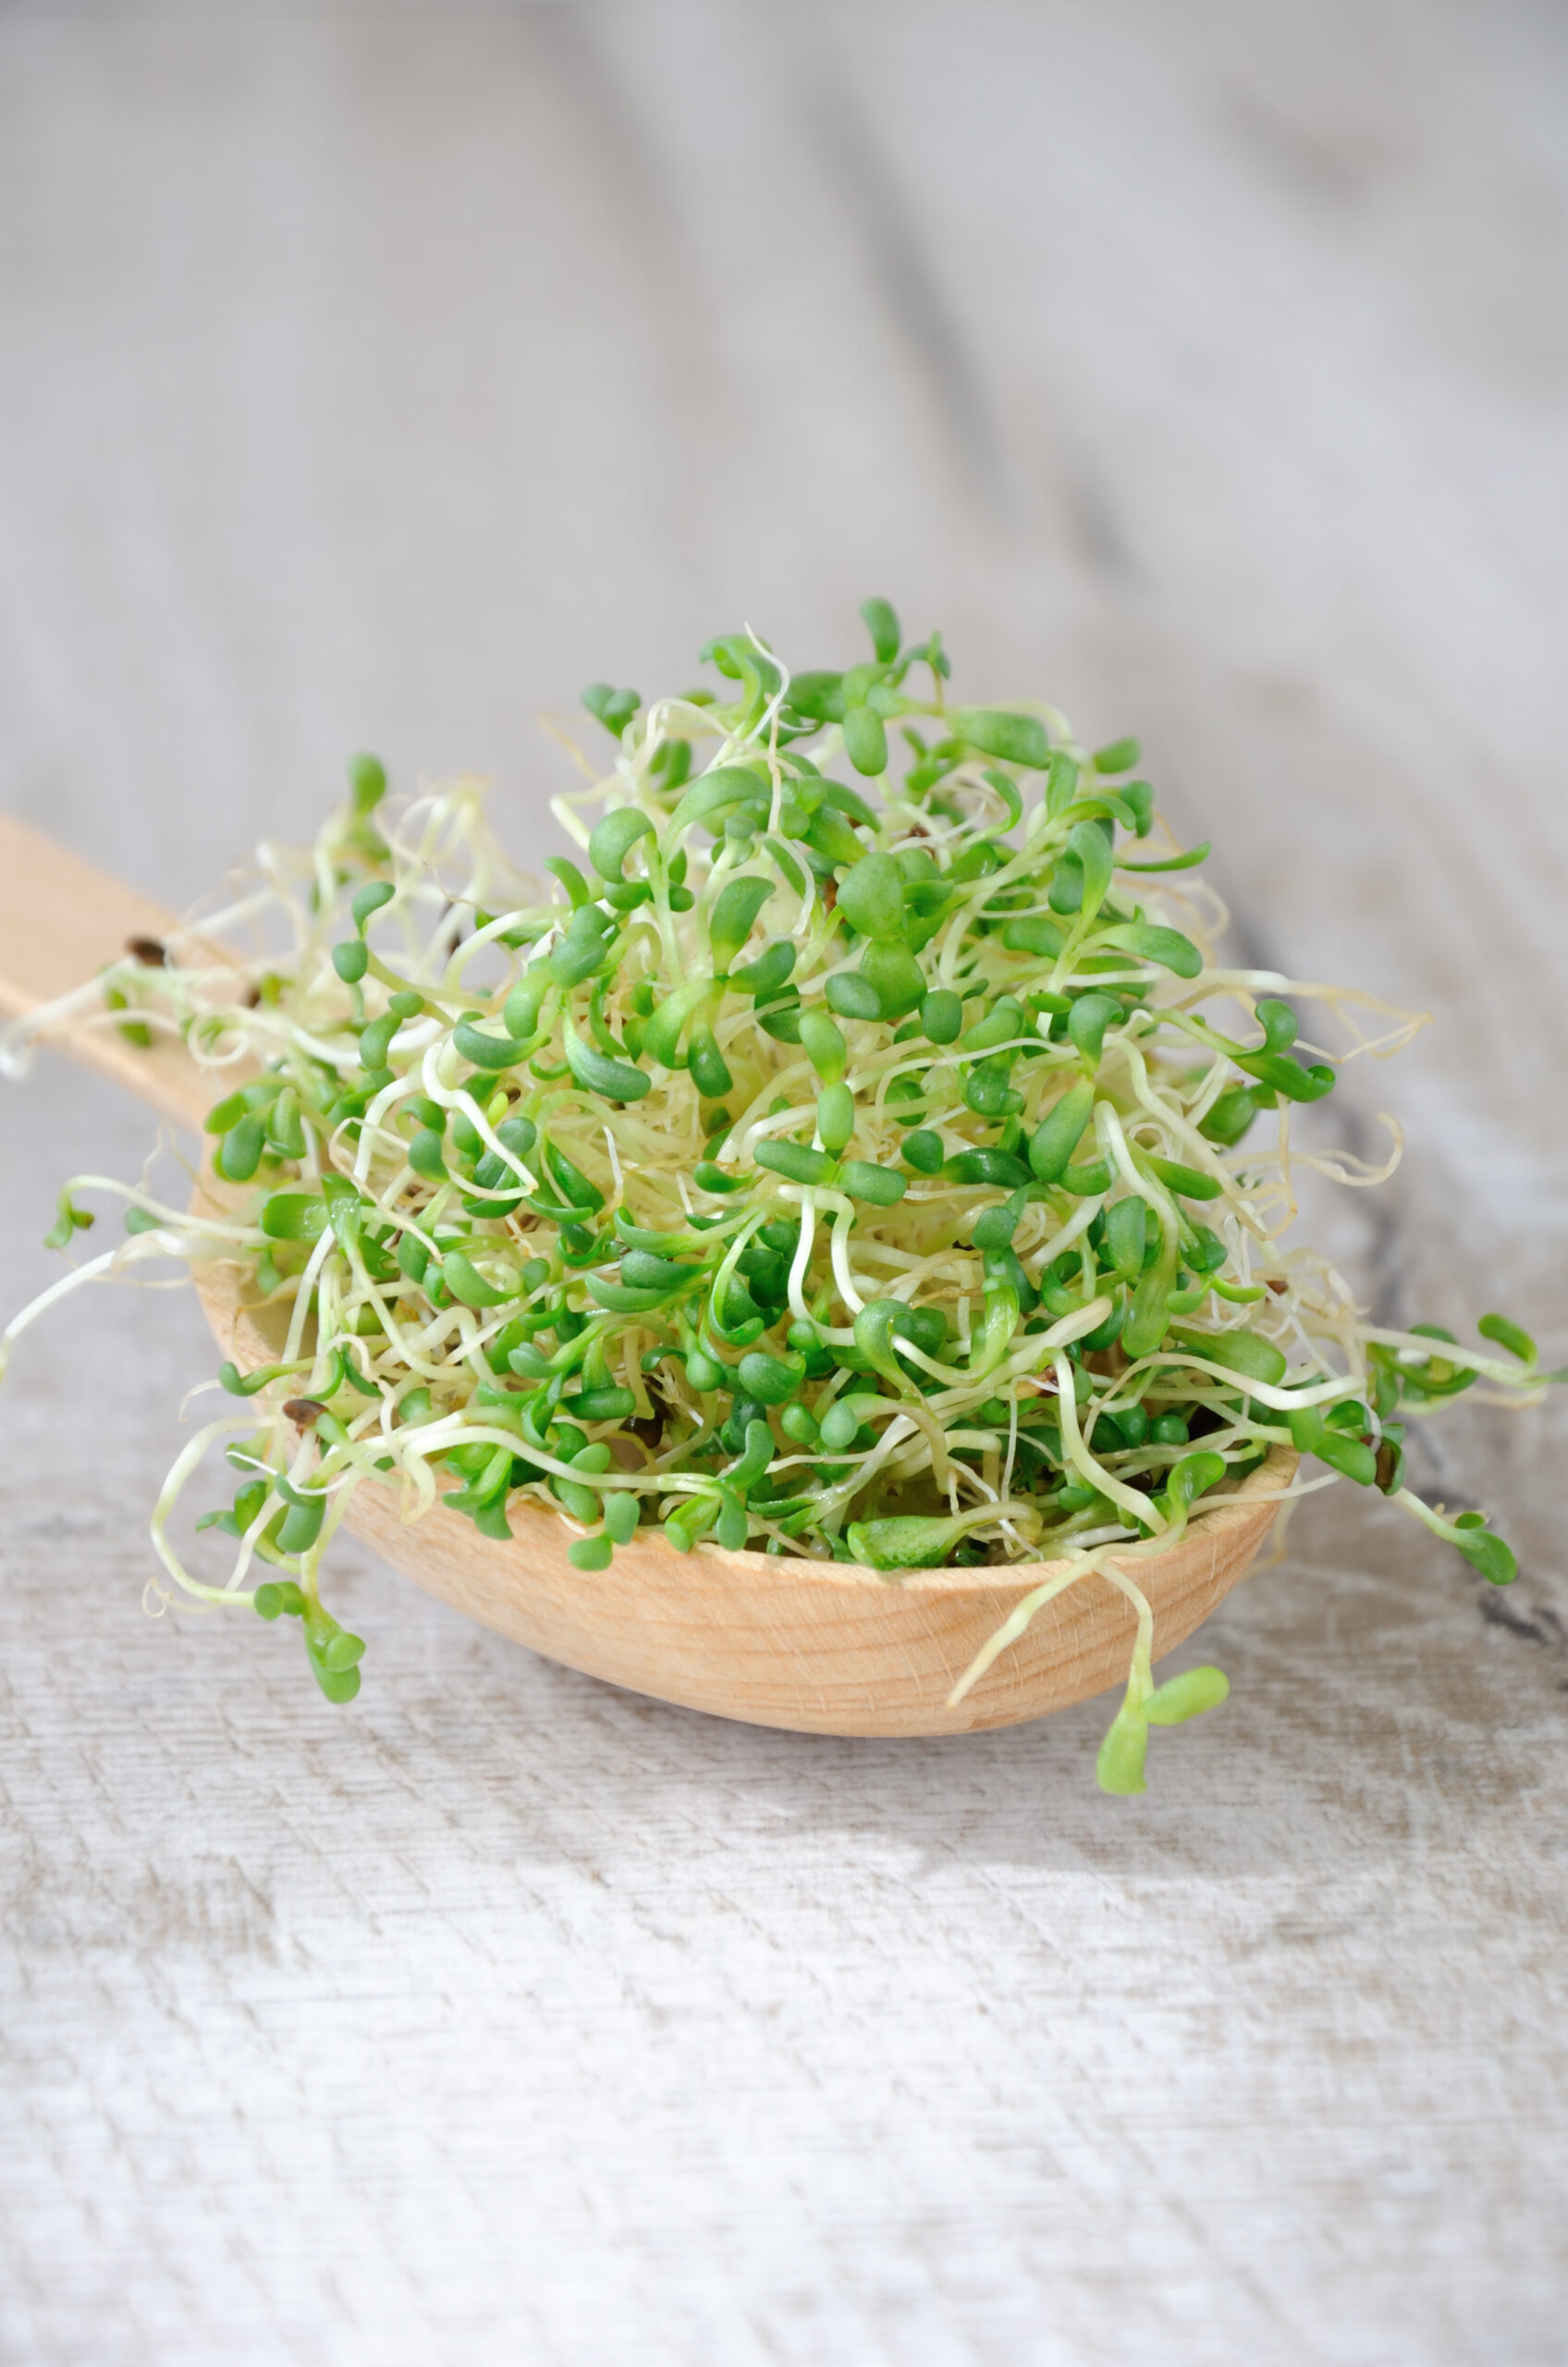 Alfalfa Sprouts | Herbs To Avoid With Autoimmune Disease